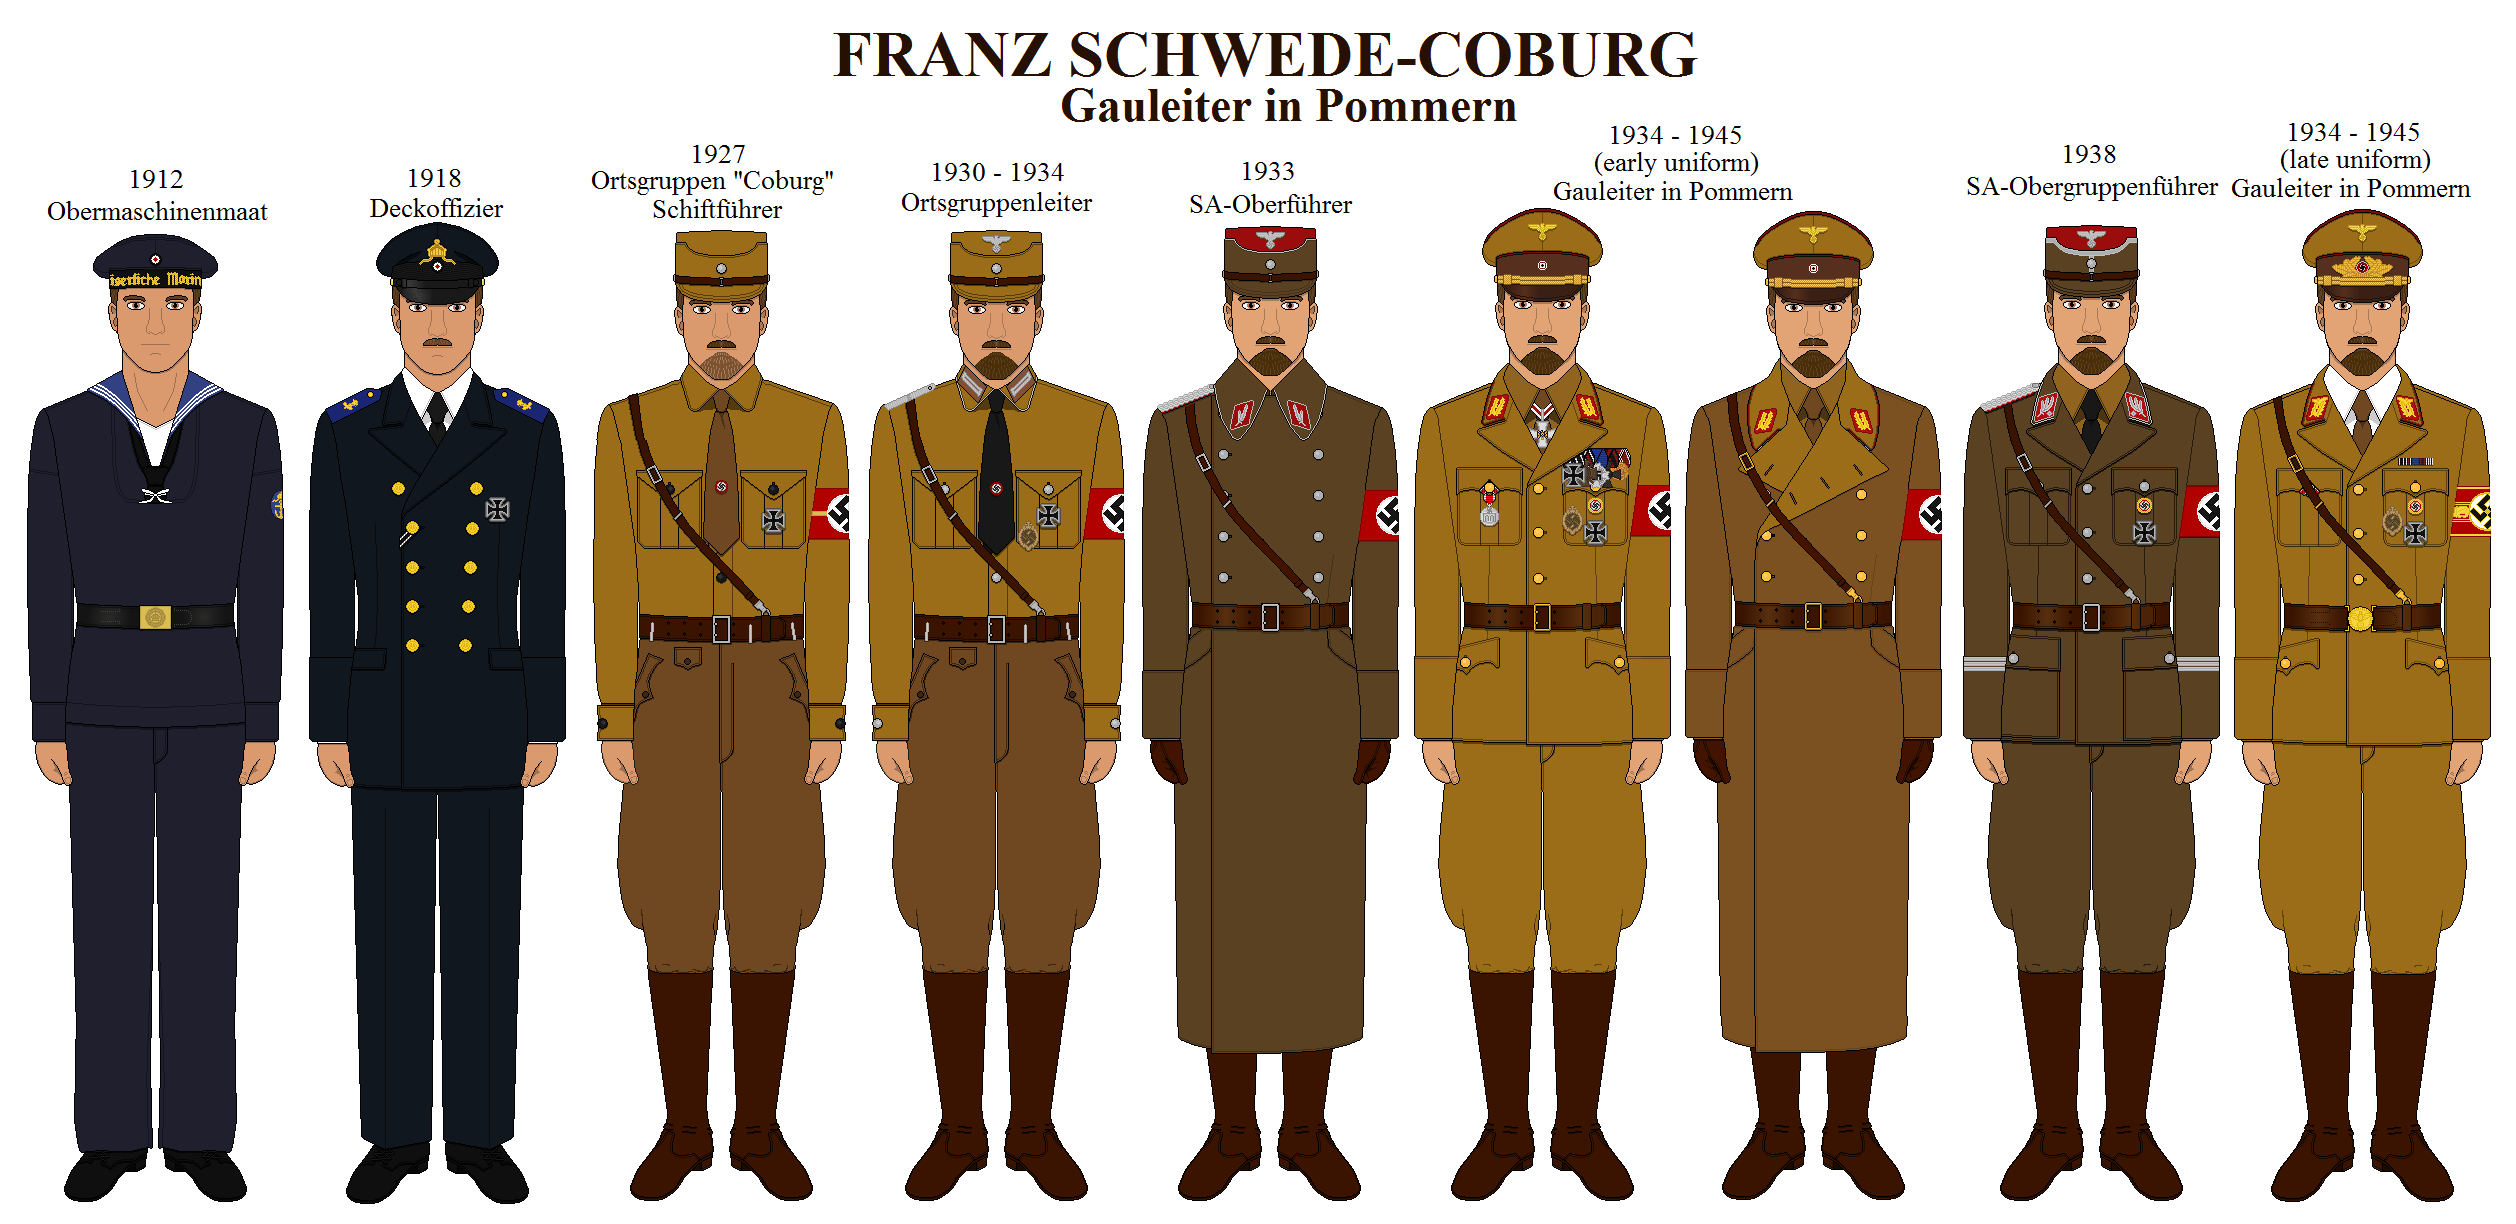 Franz Schwede-Coburg's Uniforms by Obergruppenfuhrer69 on DeviantArt